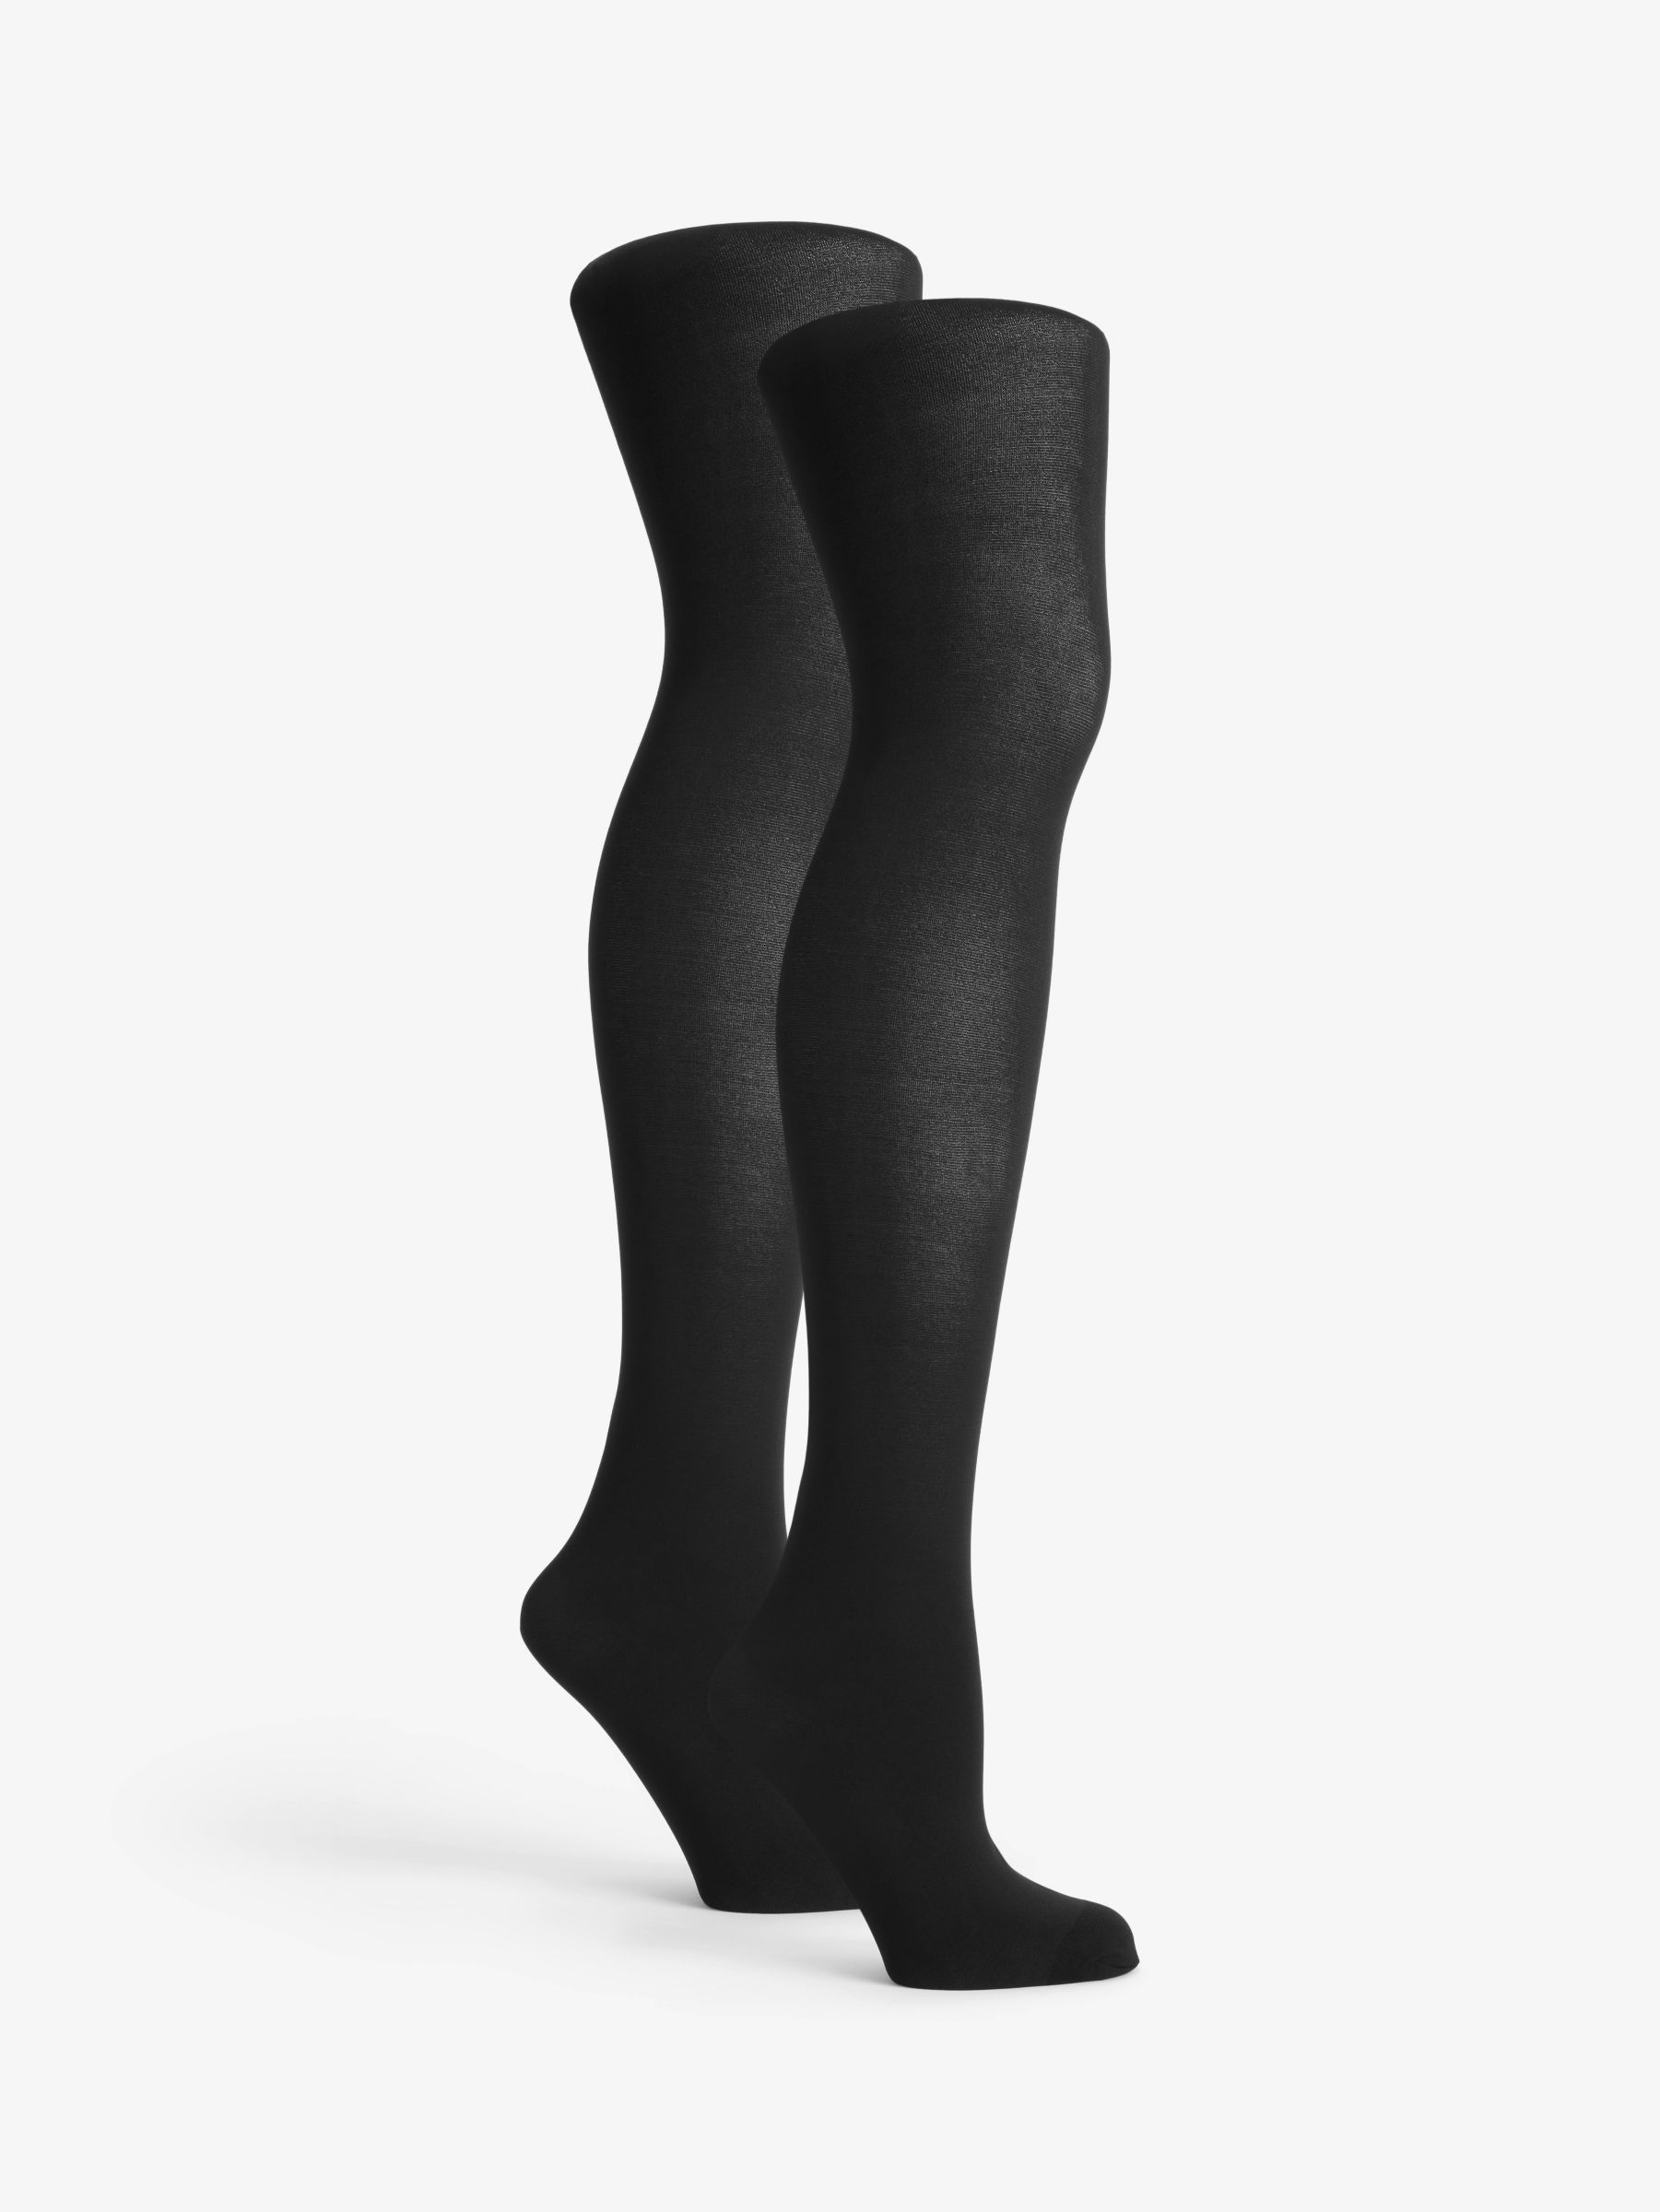 Ladies Black Opaque Tights - 40 Denier - Pack of 2 - Multipack - 100% Nylon